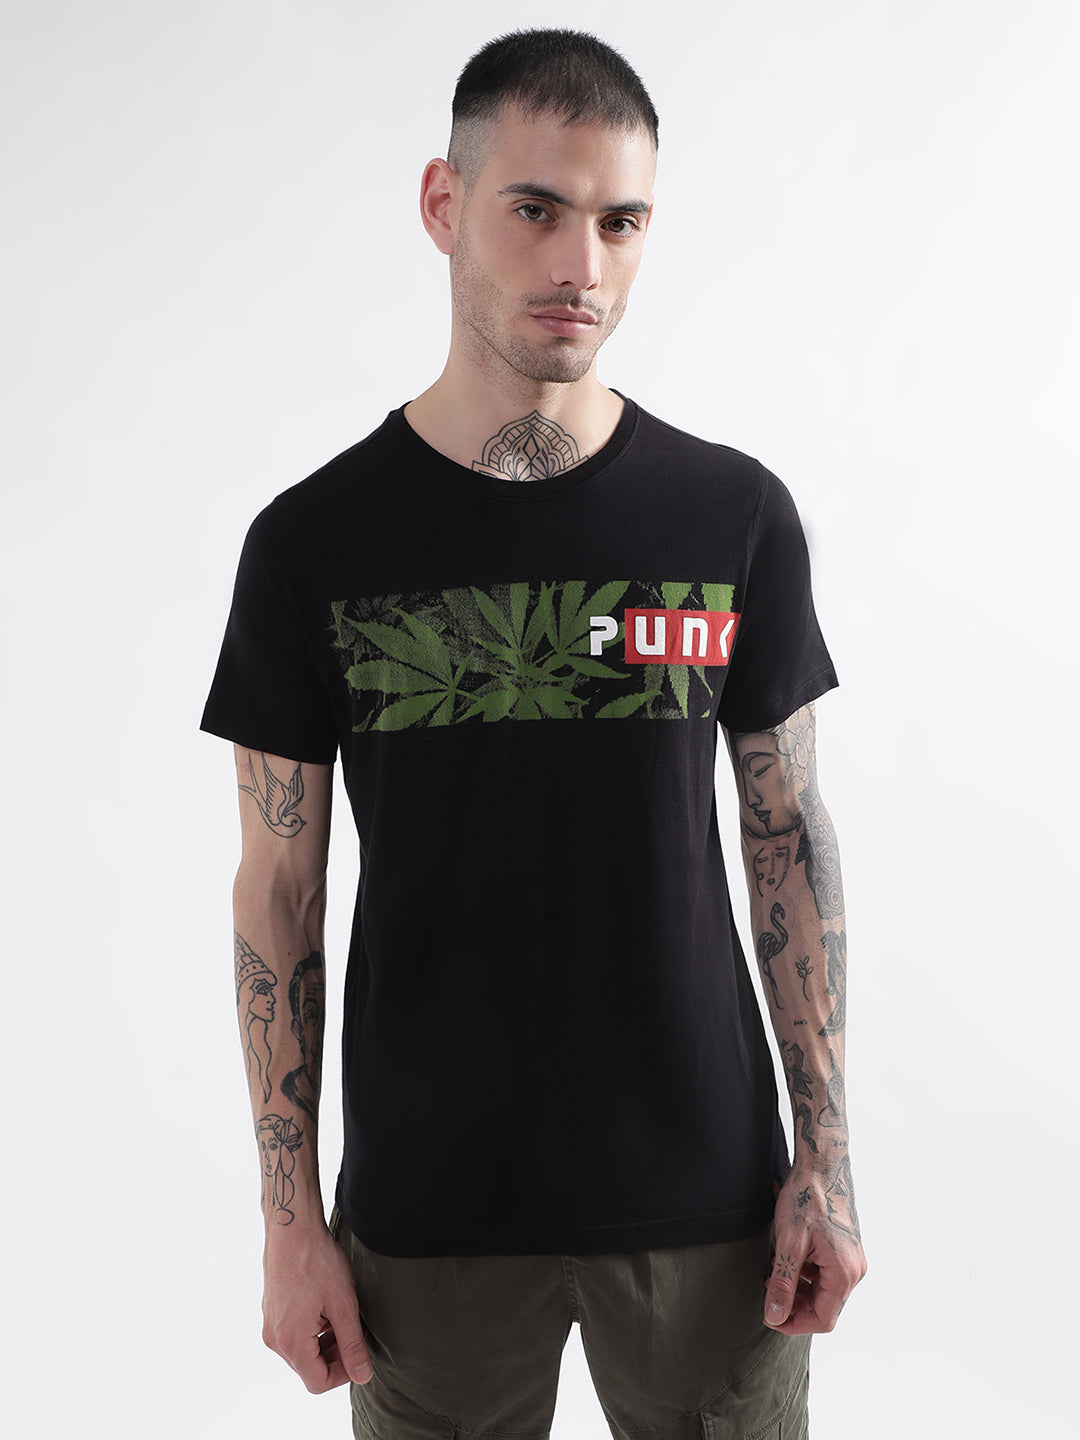 Supreme Punk Black T-Shirt